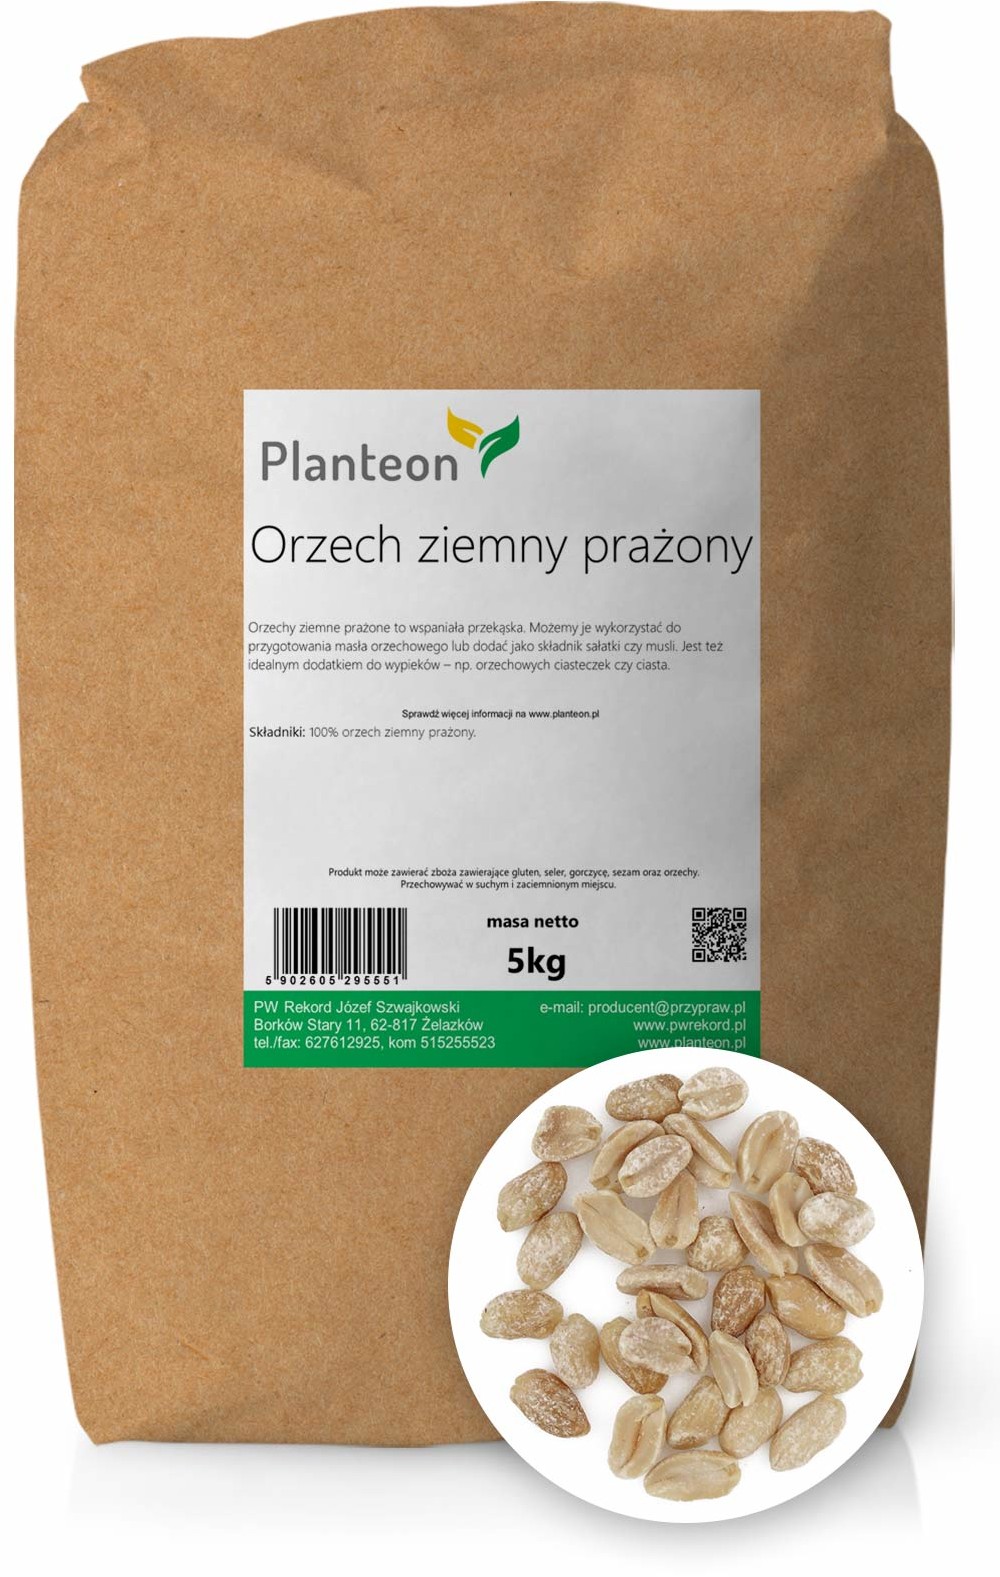 Planteon Orzechy ziemne prażone 5kg 2-0643-01-6